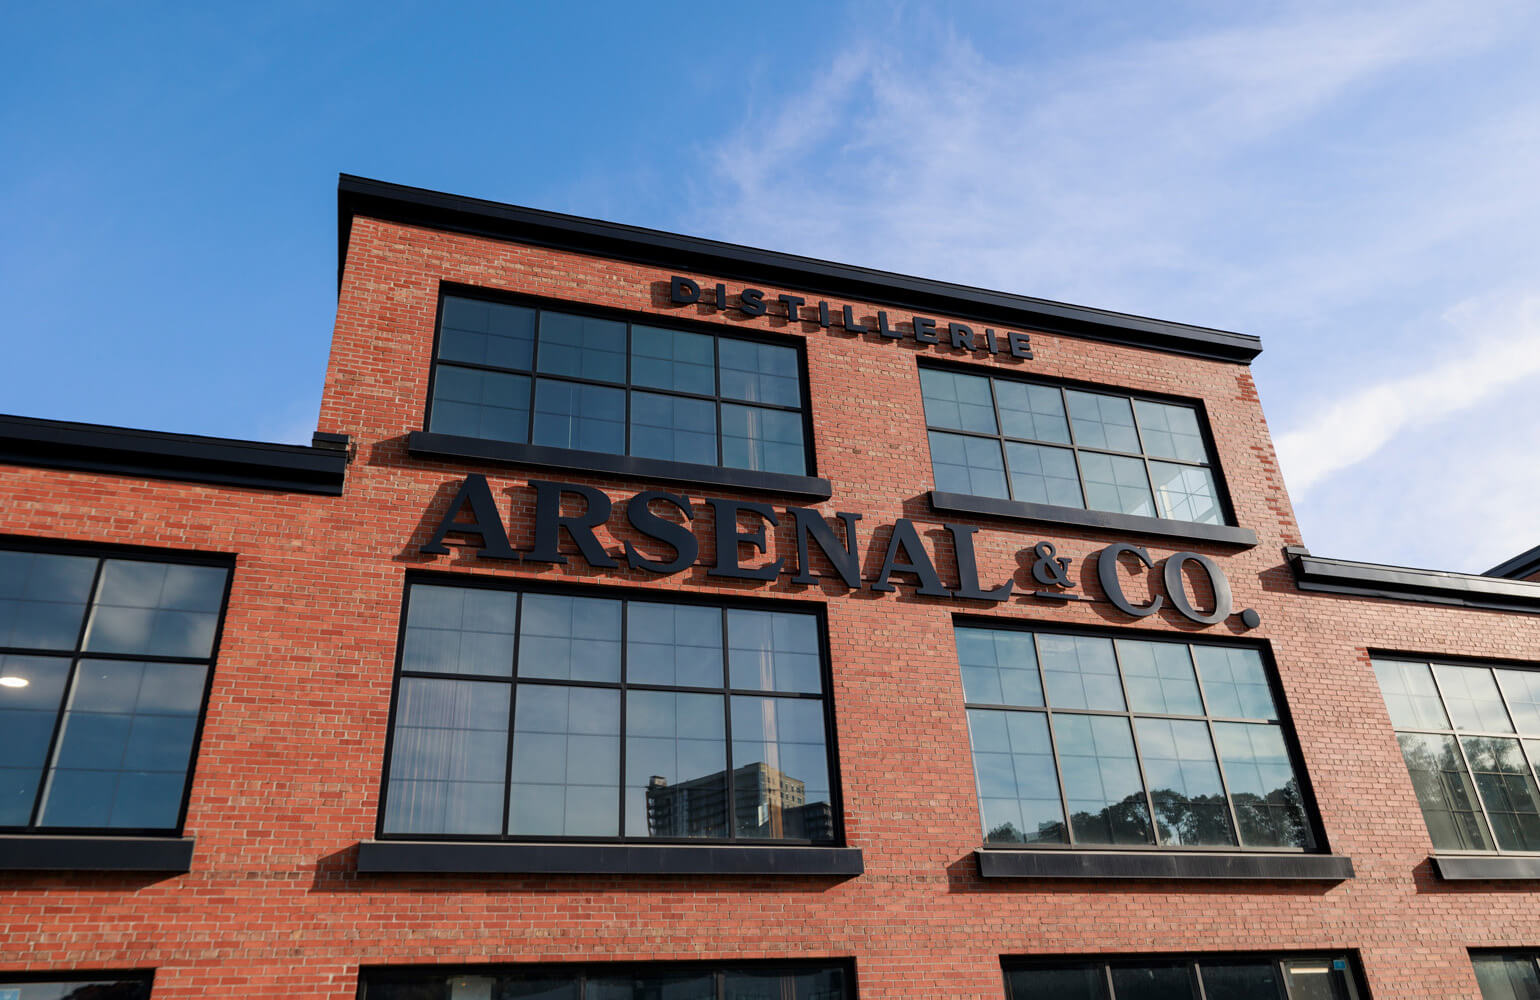 Distillerie Arsenal & CO.